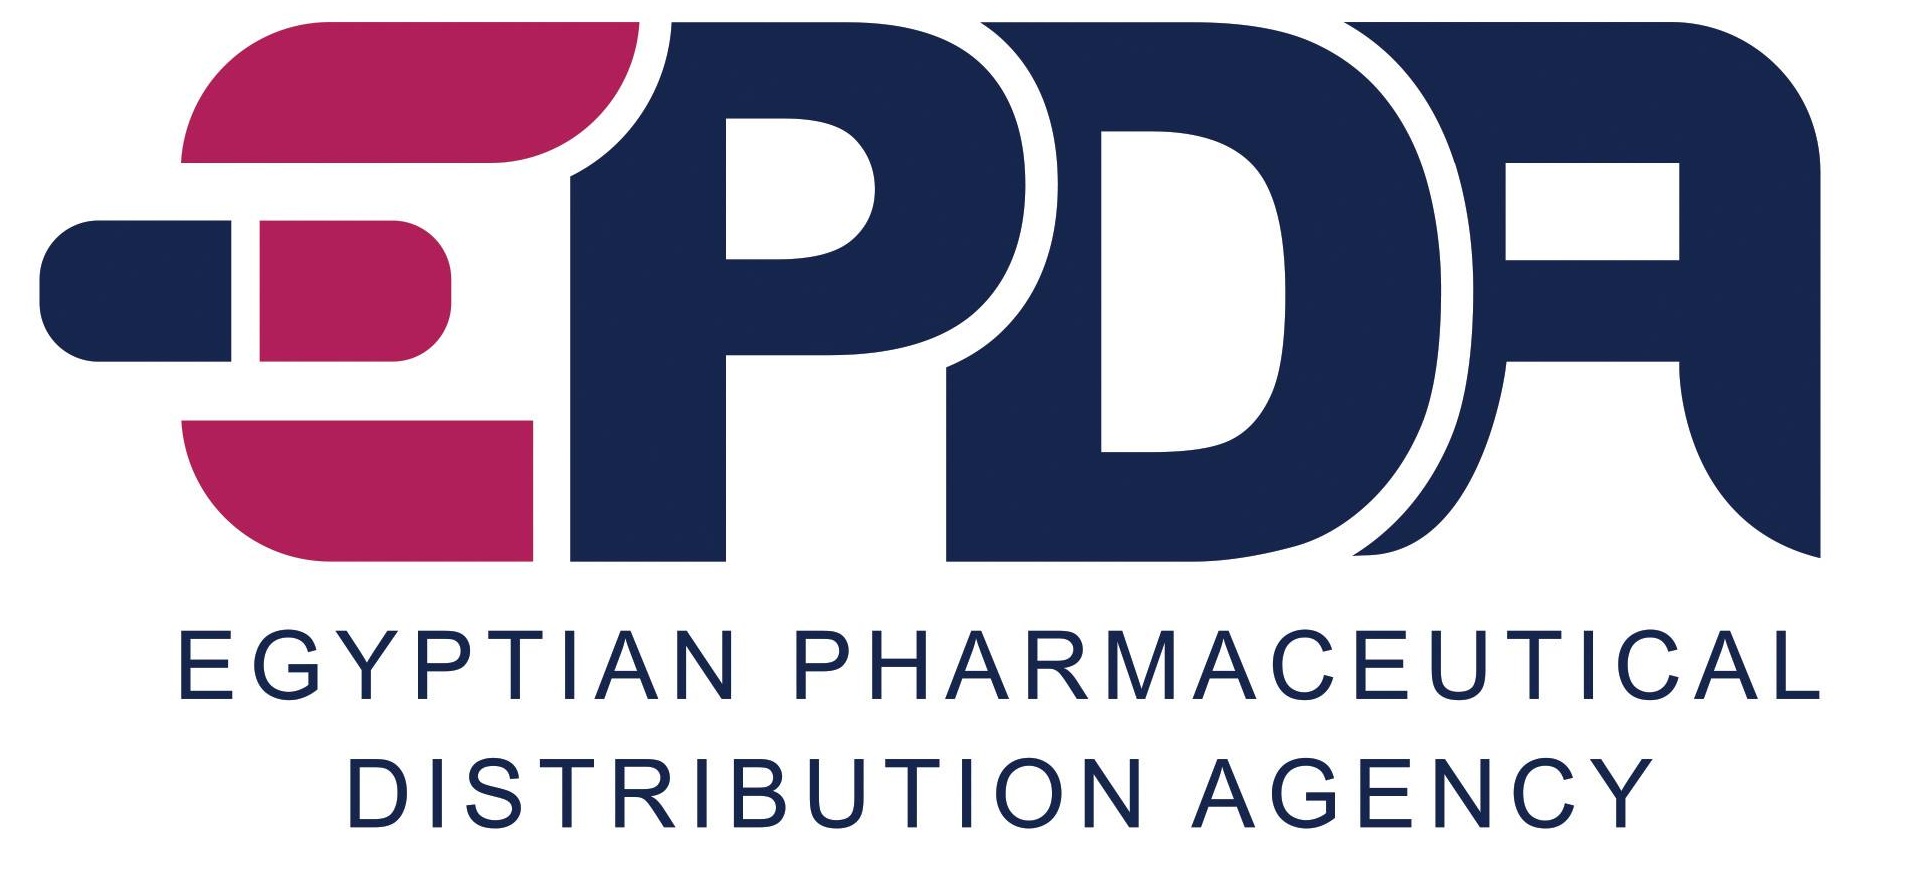 Egyptian Pharmaceutical Distribution Agency - EPDA